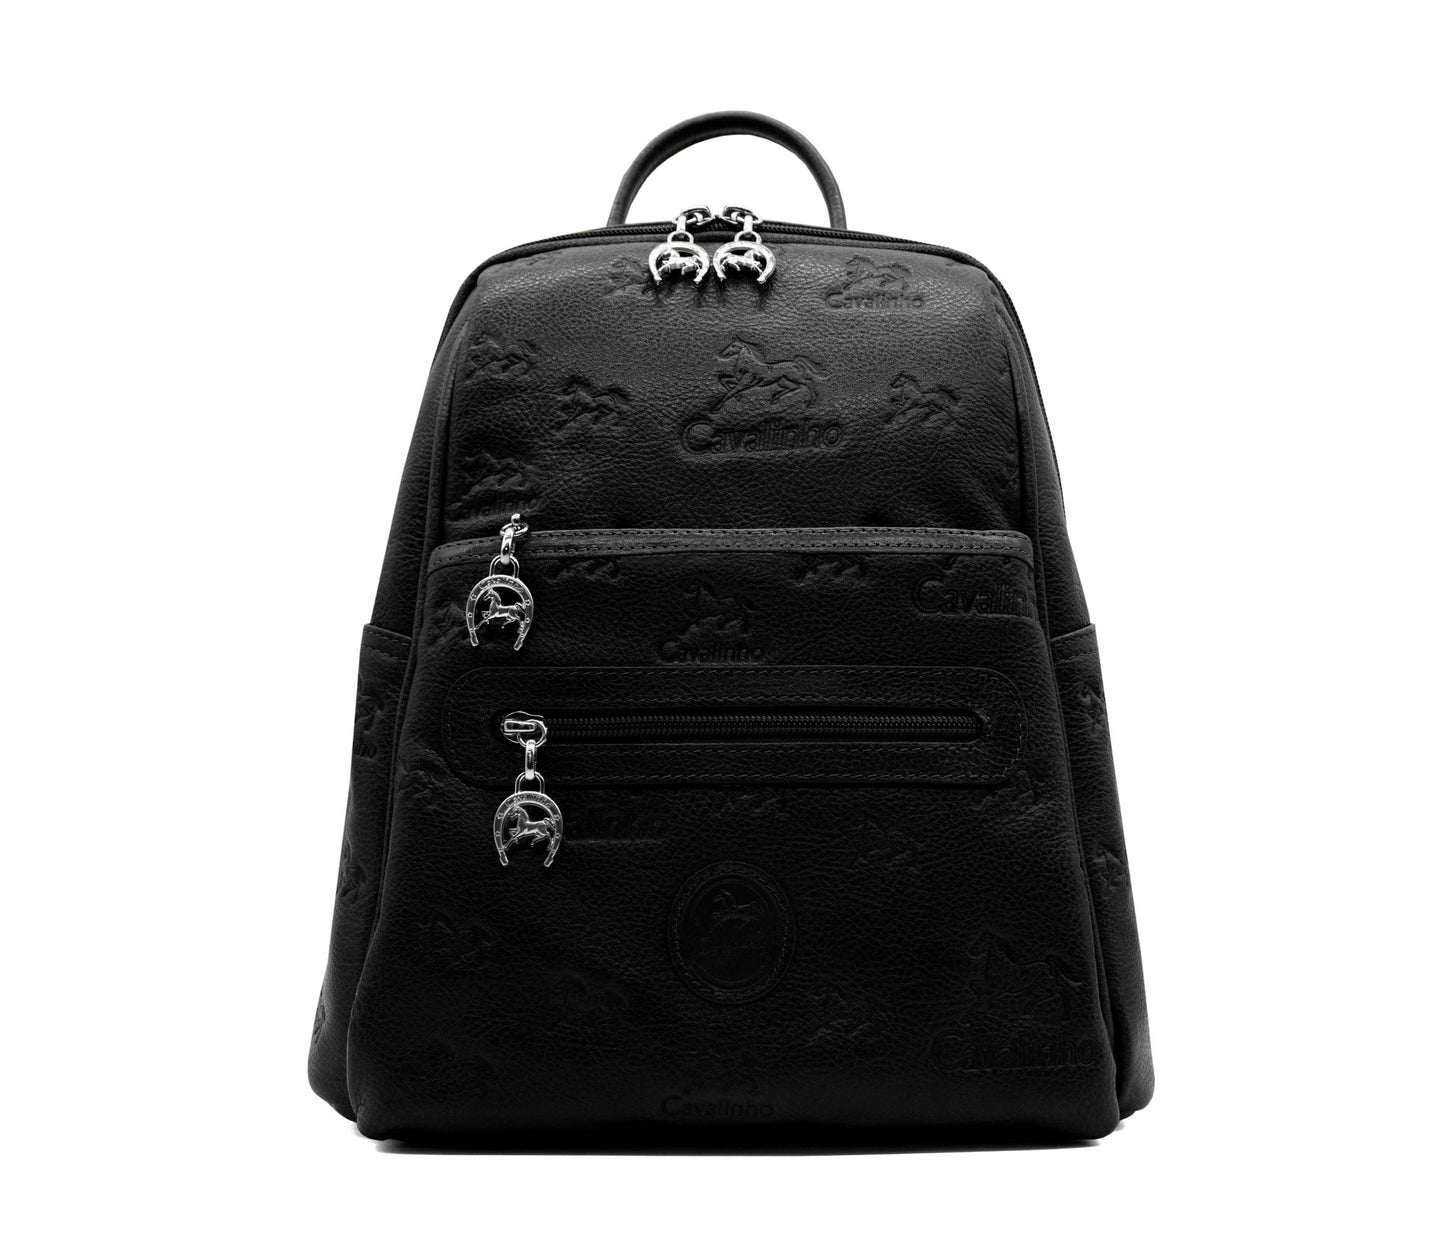 #color_ Black | Cavalinho Cavalo Lusitano Leather Backpack - Black - 18090412.01_1